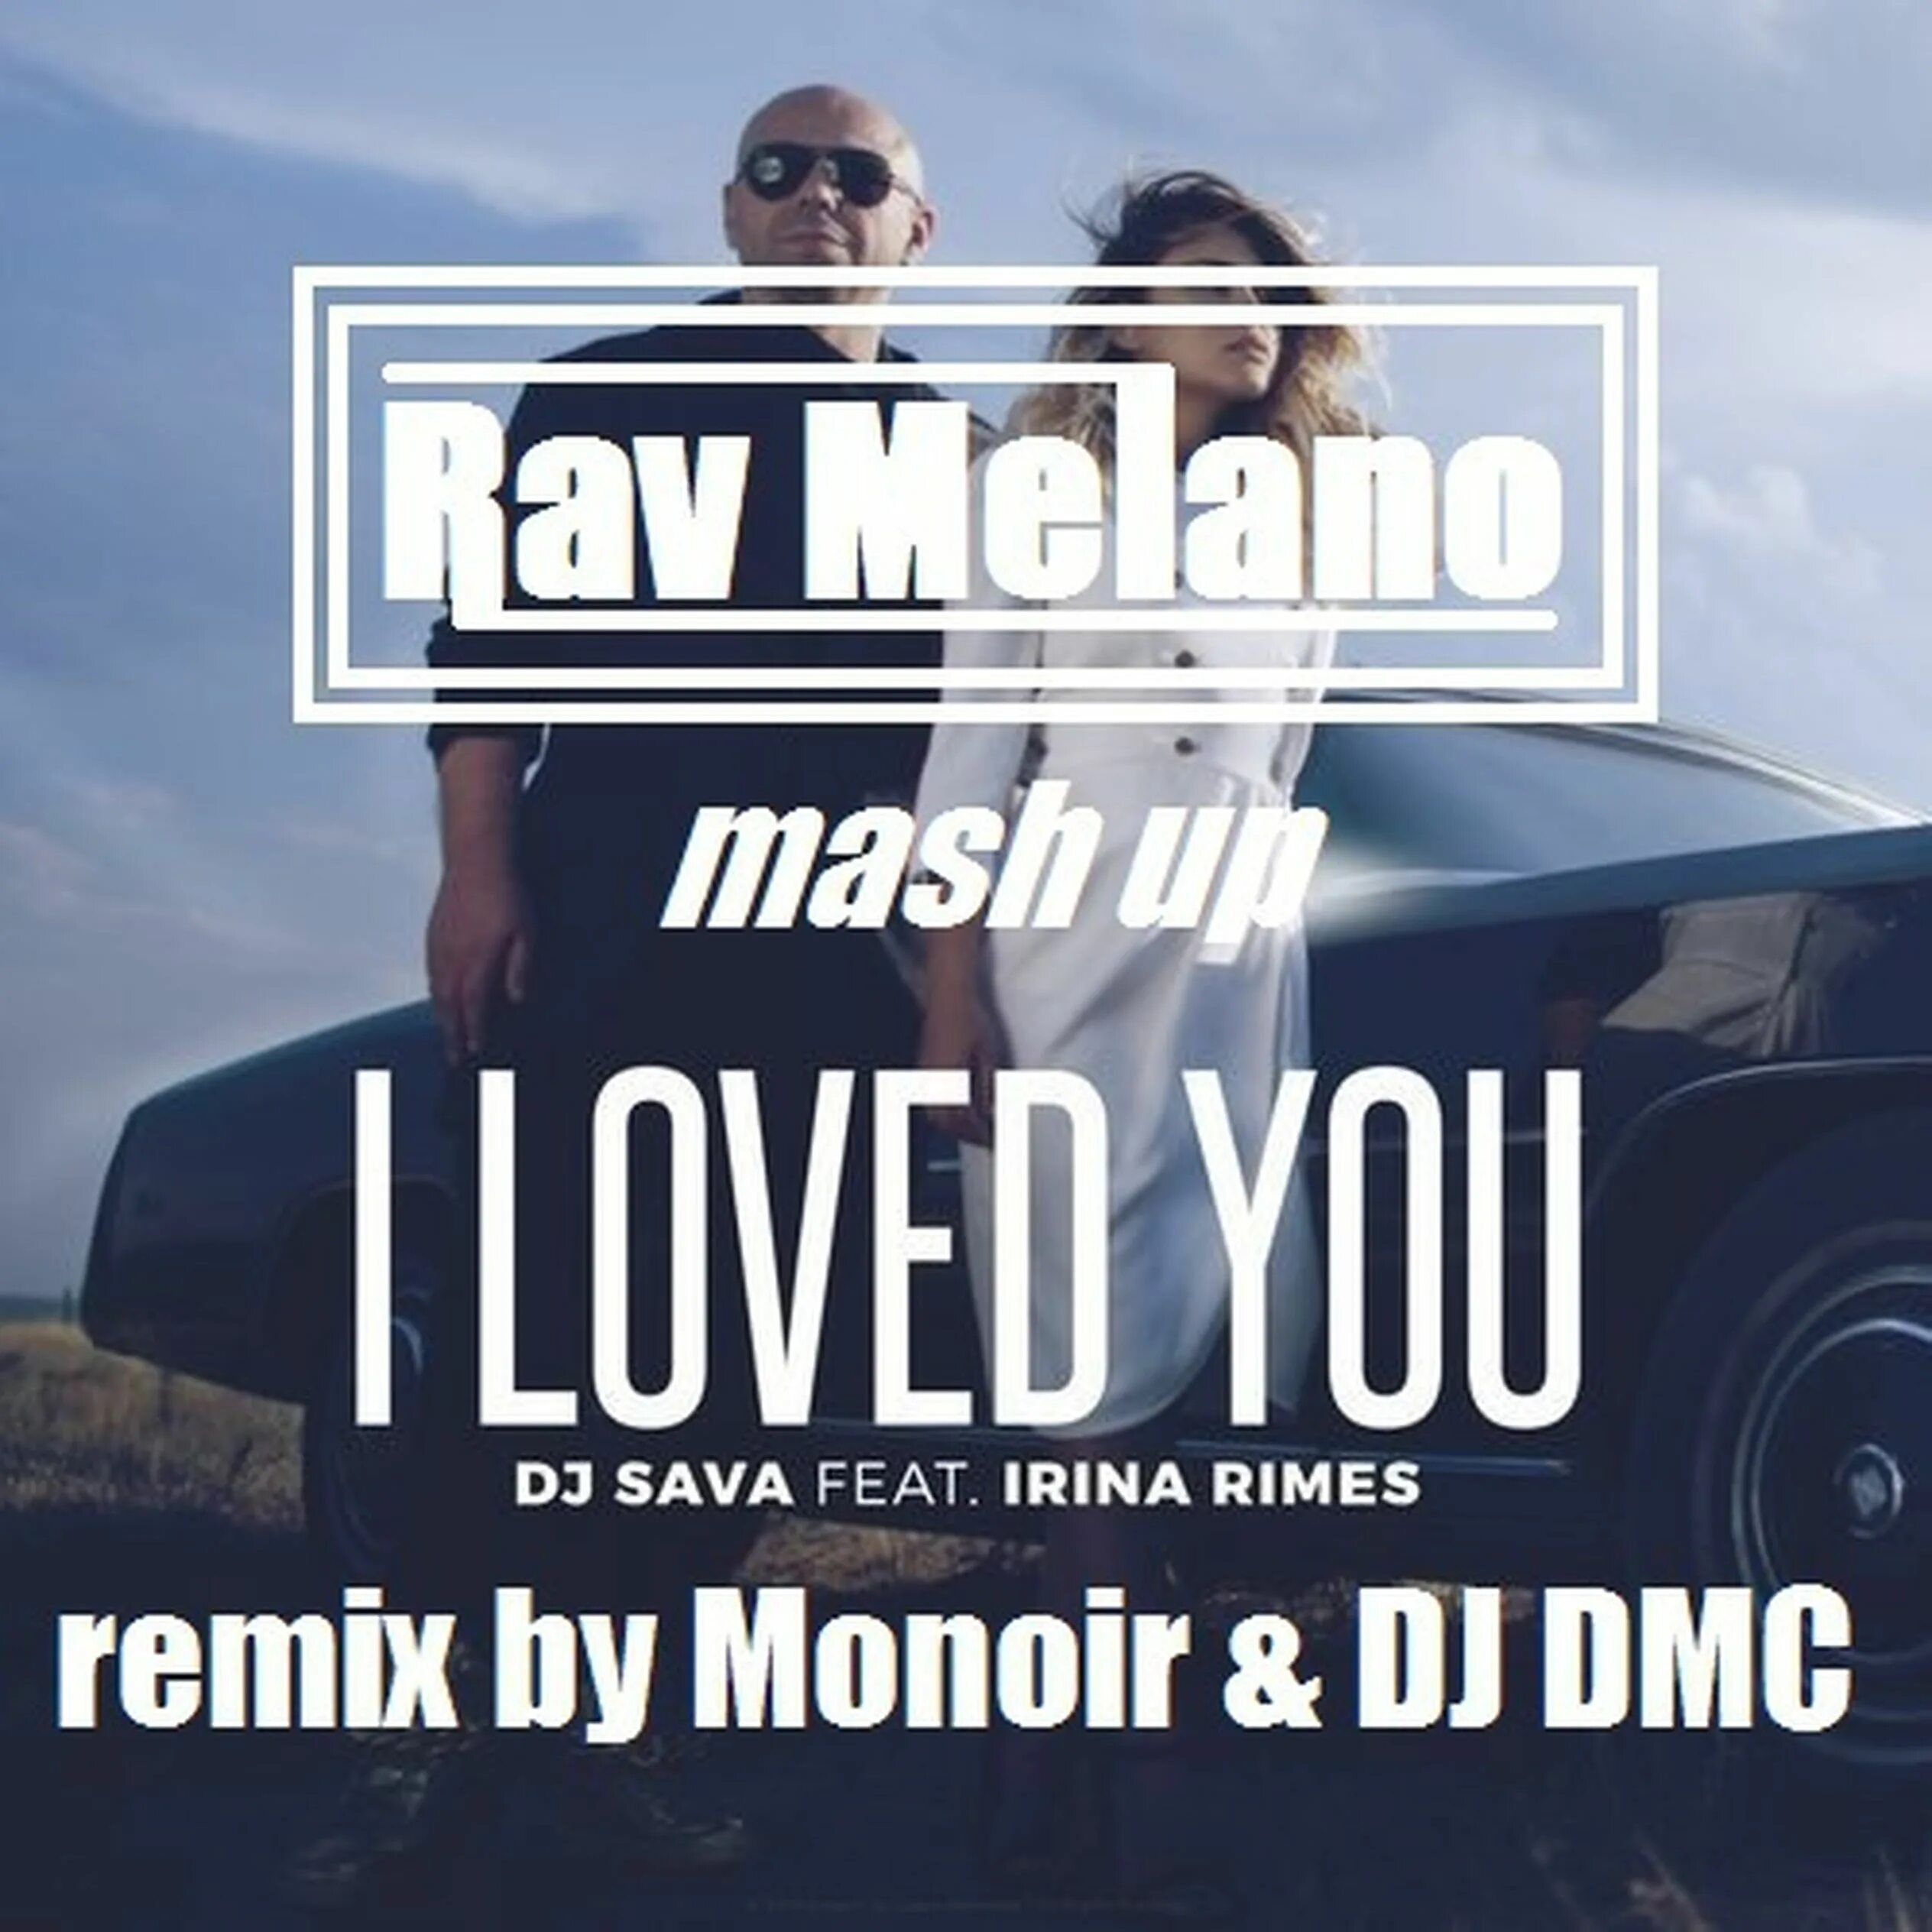 DJ Sava Irina i Loved you. Irina Rimes – i Loved you (Denis first Remix). DJ Sava feat. Irina Rimes - i Loved you Lyrics. I loved you dj sava feat